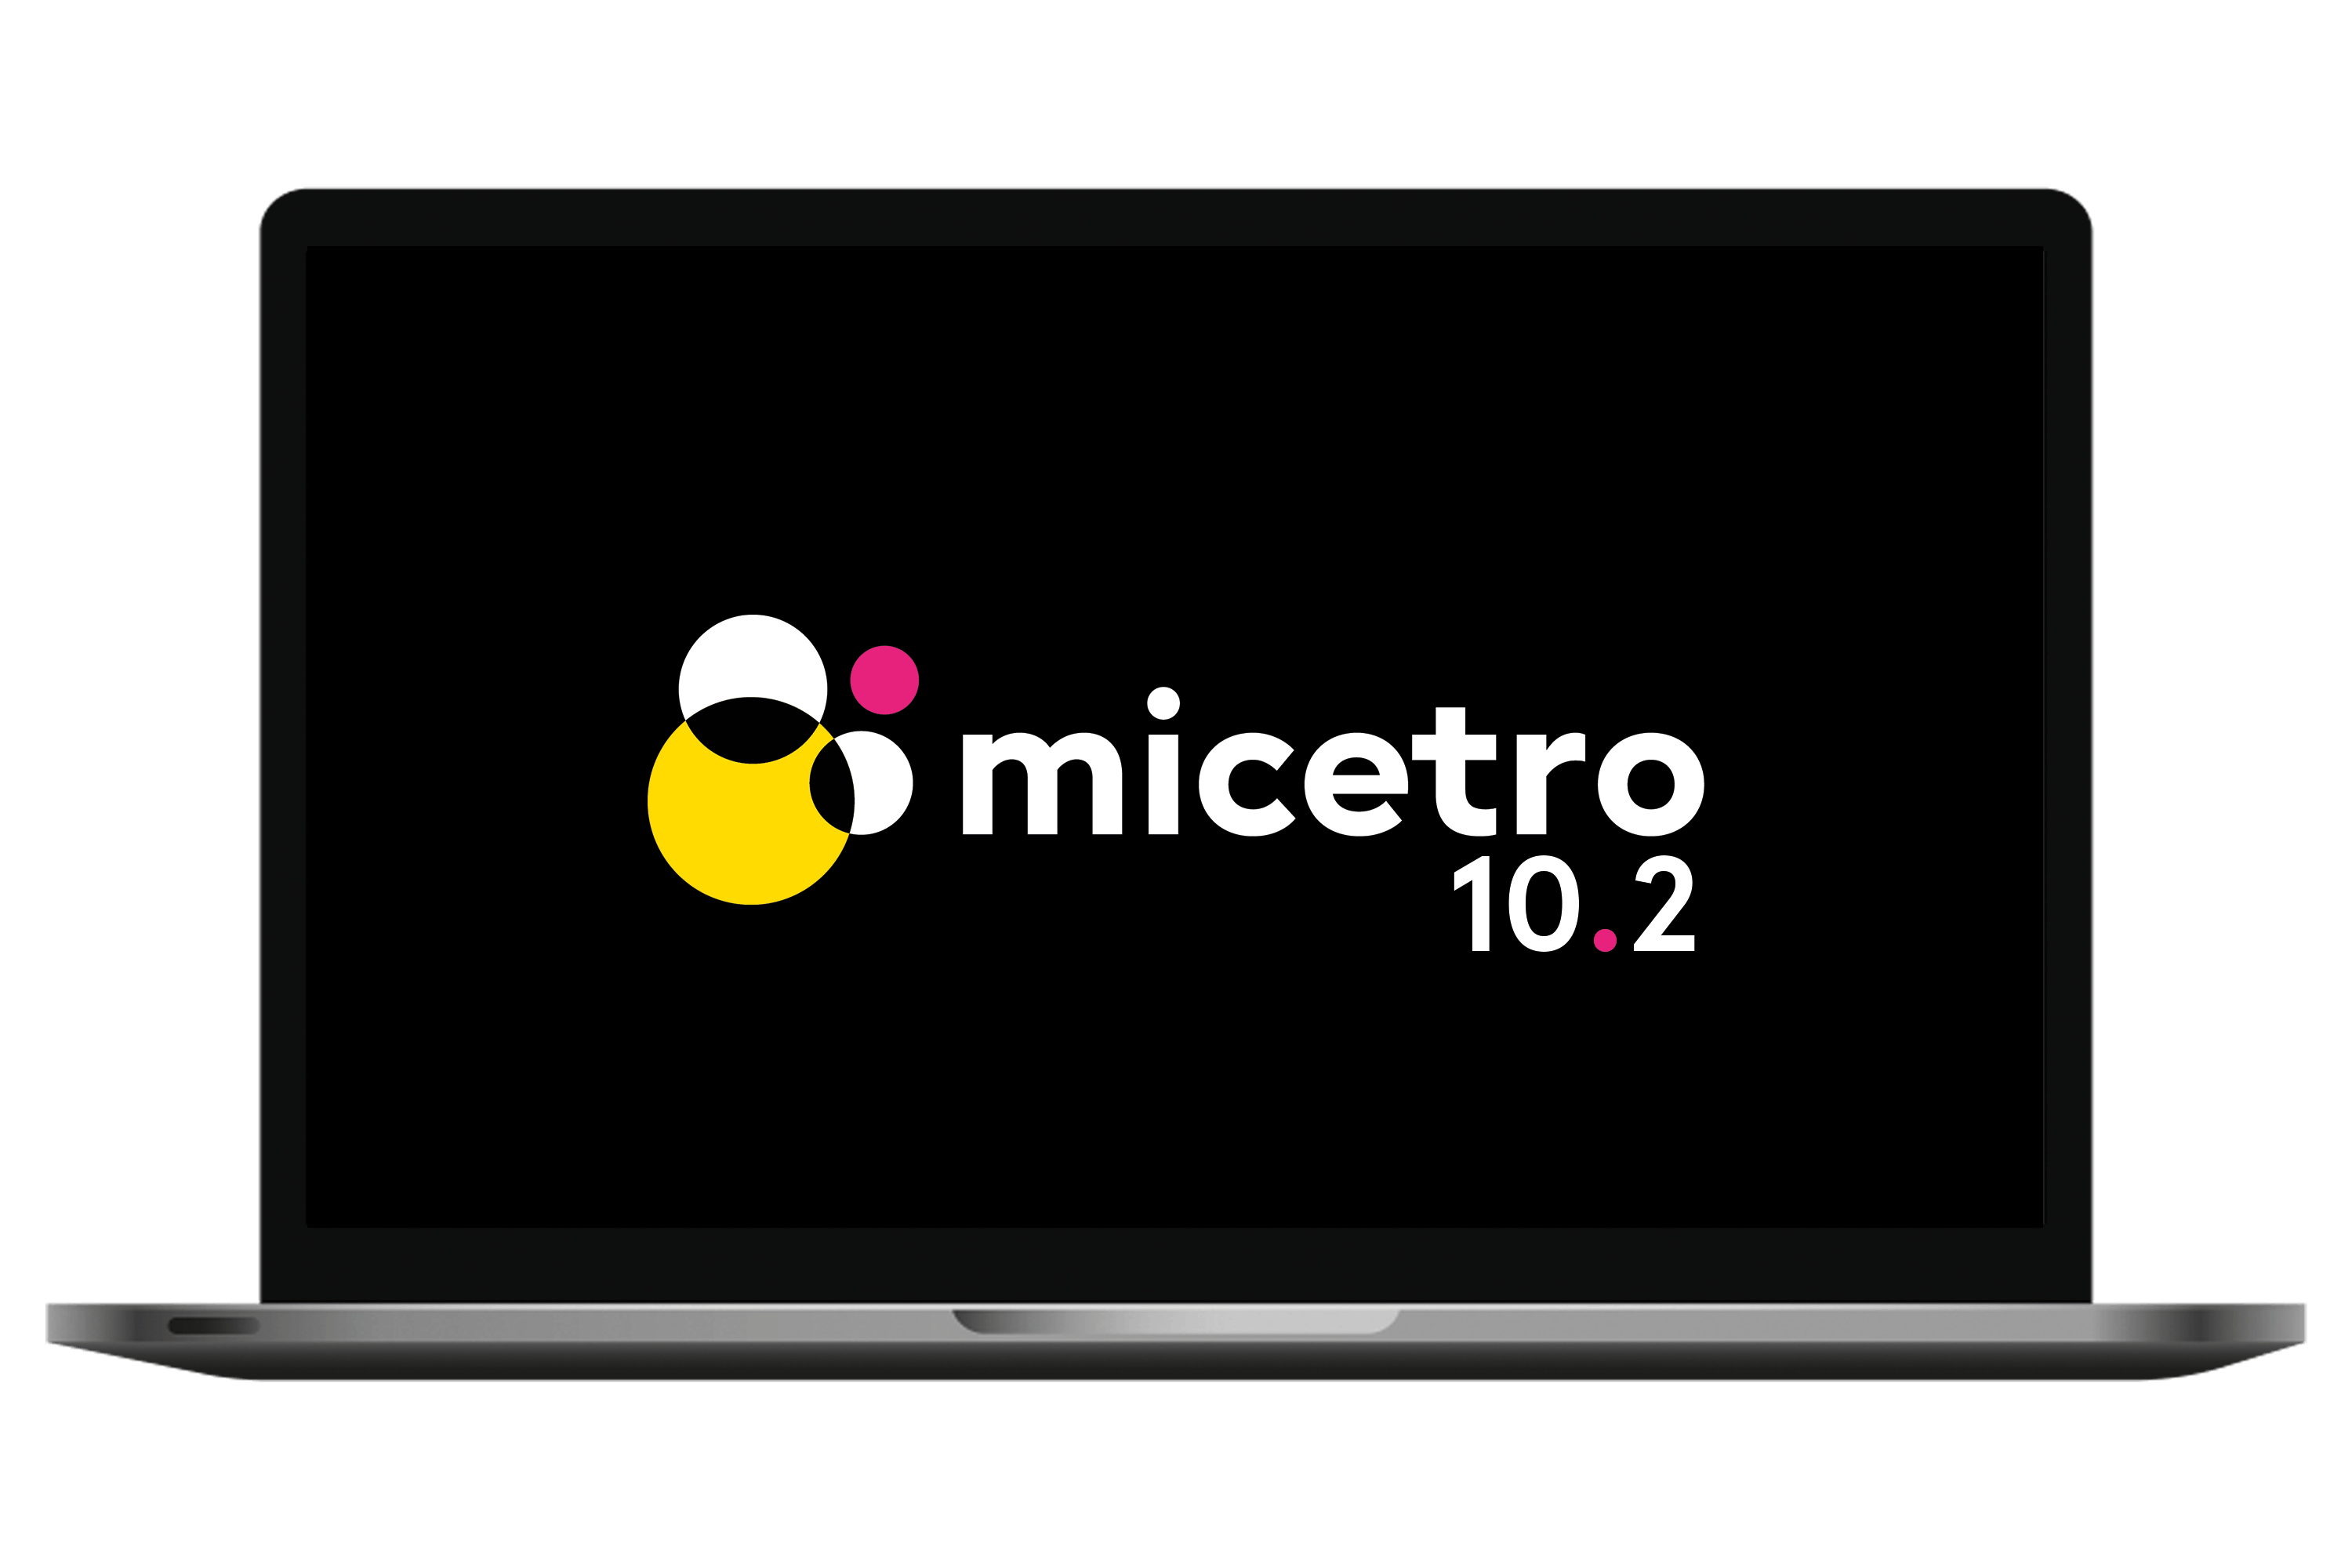 Men&Mice announce Micetro 10.2